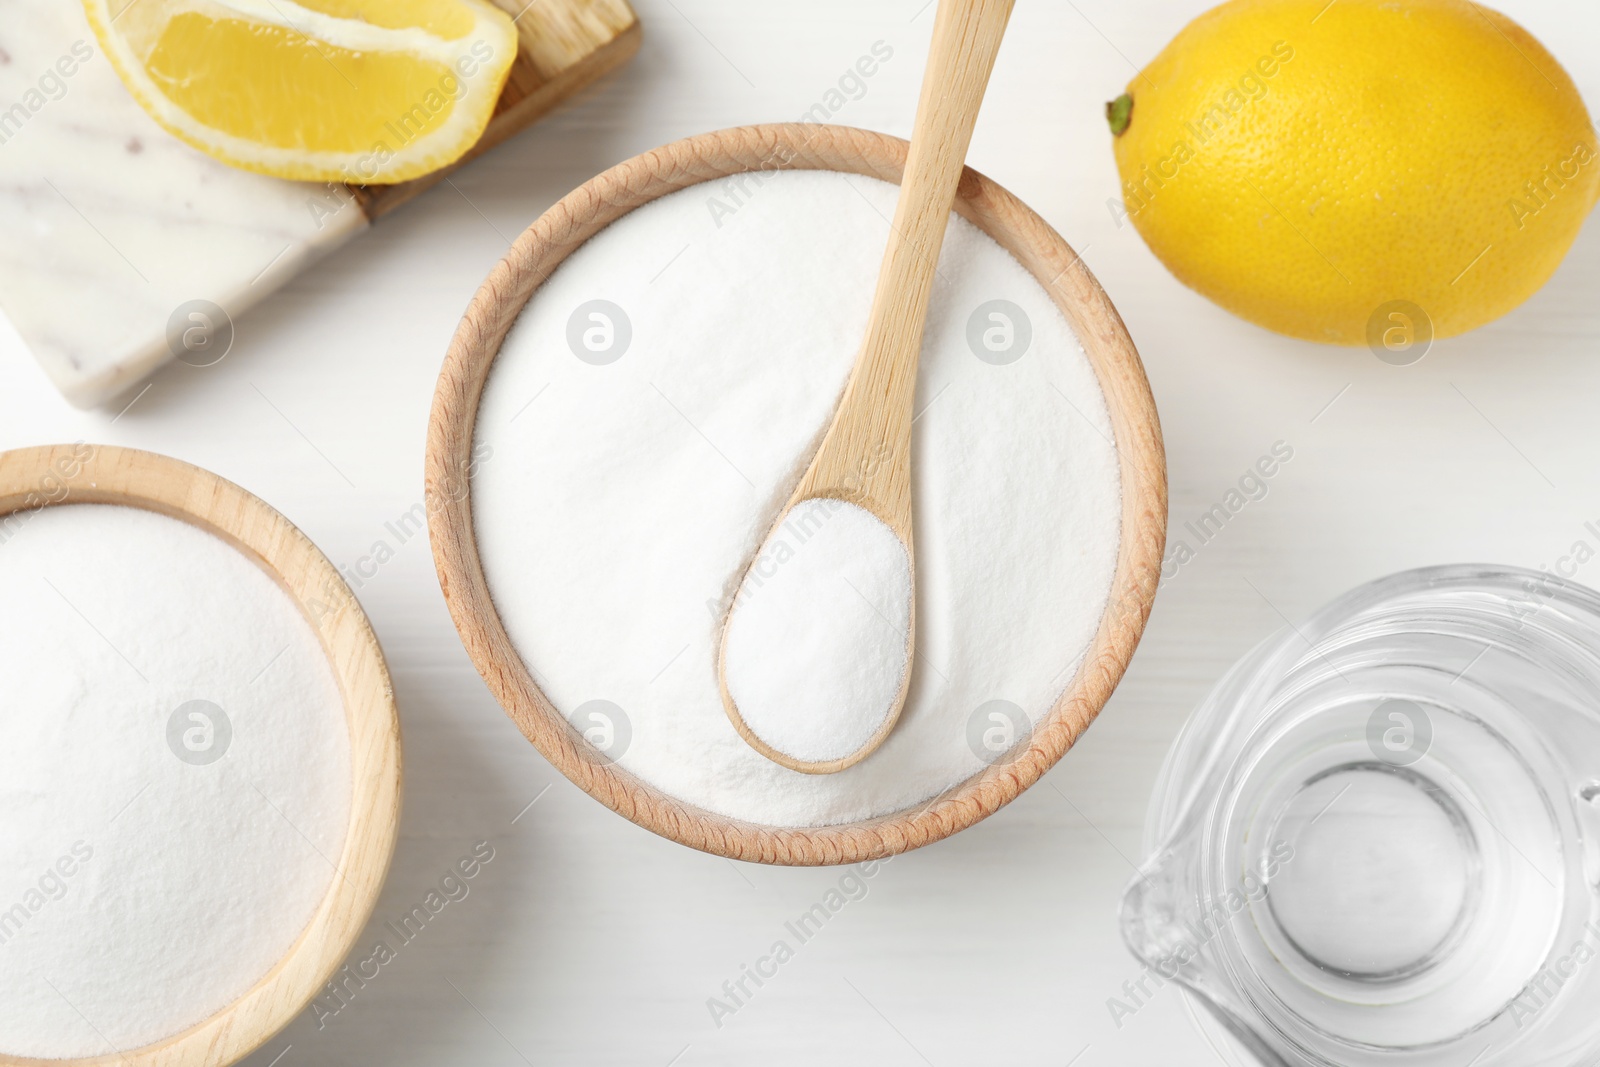 Photo of Baking soda, vinegar and lemons on white wooden table, flat lay